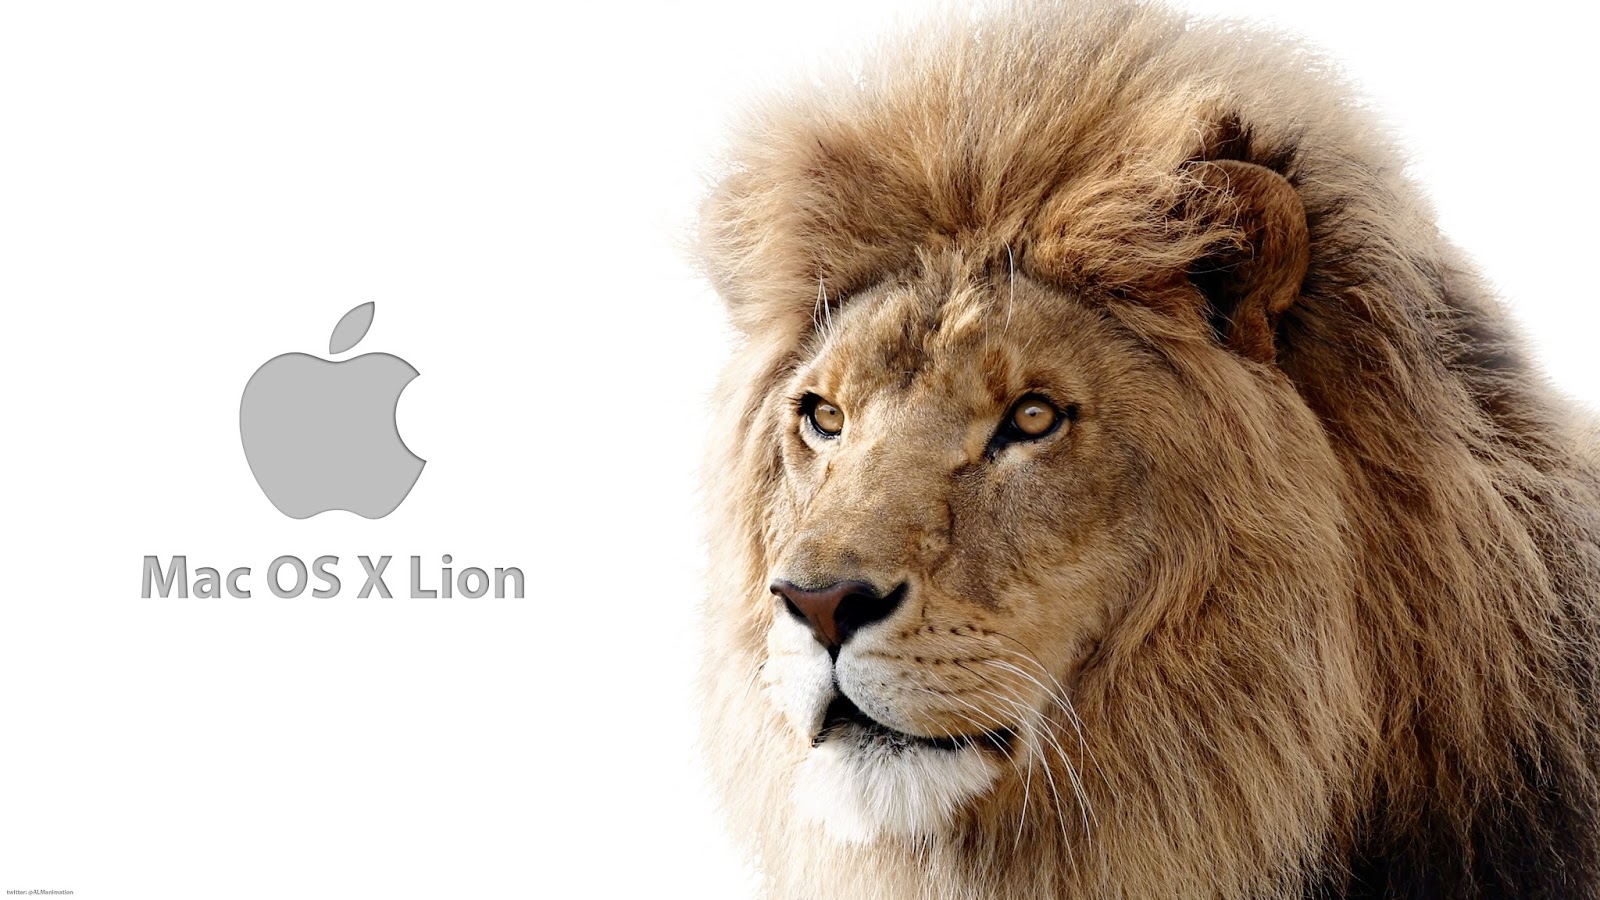 Mac_os_x_lion_10.7.511g63 installesd.dmg download